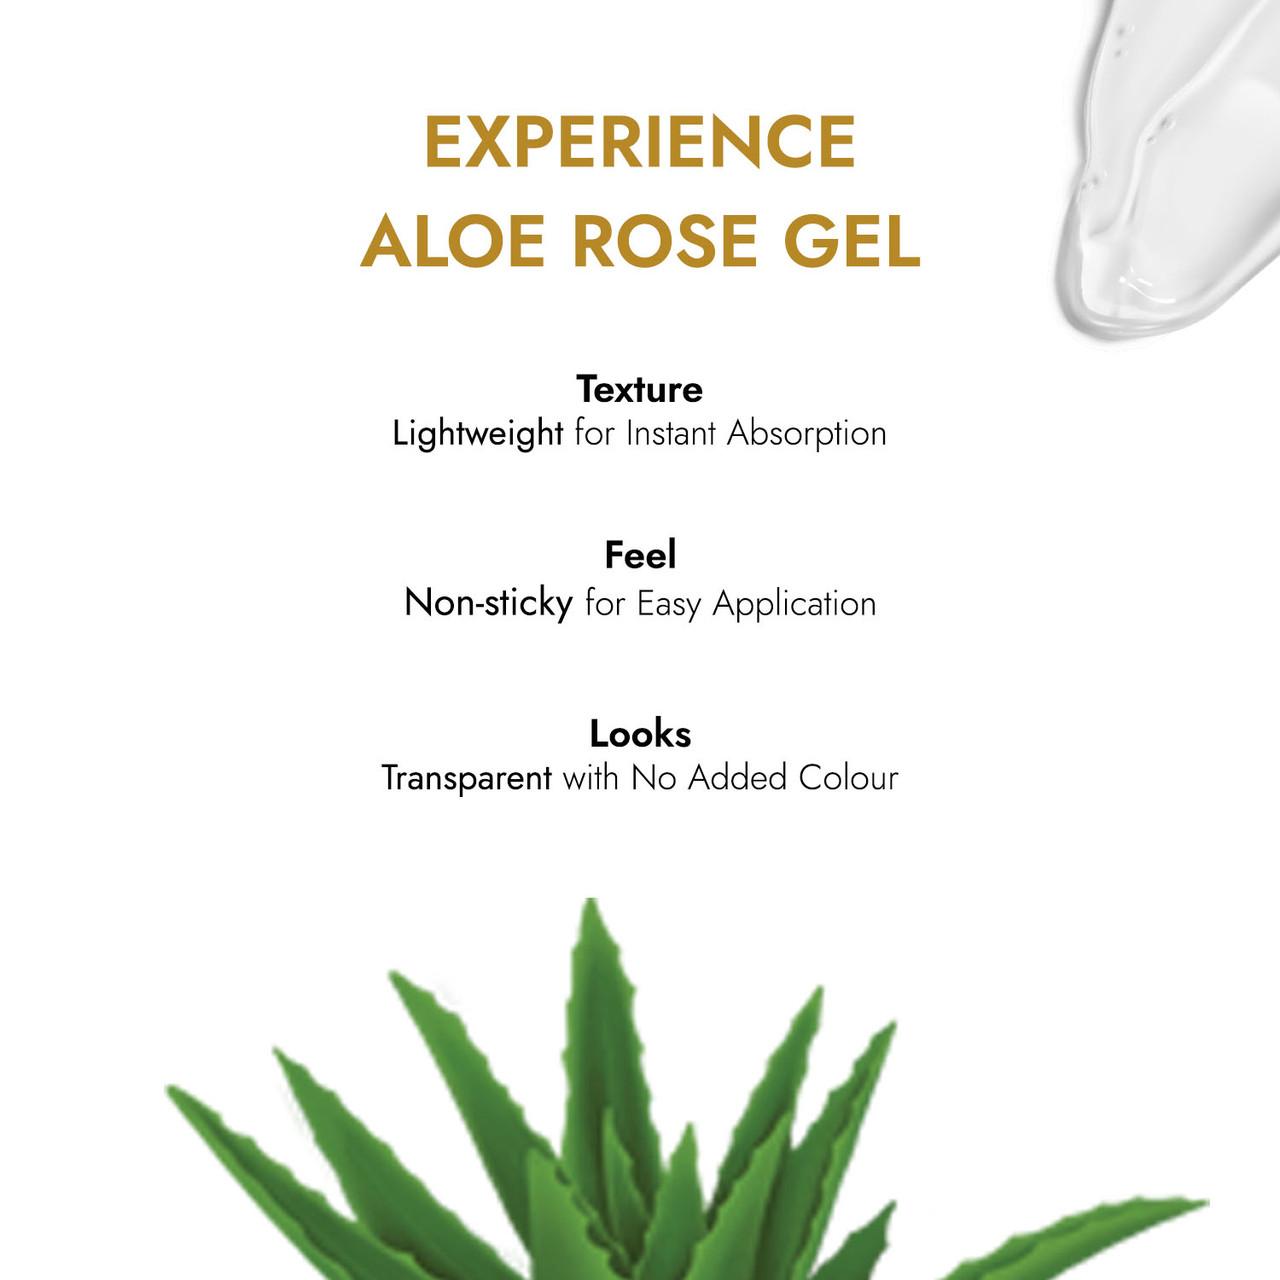 Aloe Rose Gel